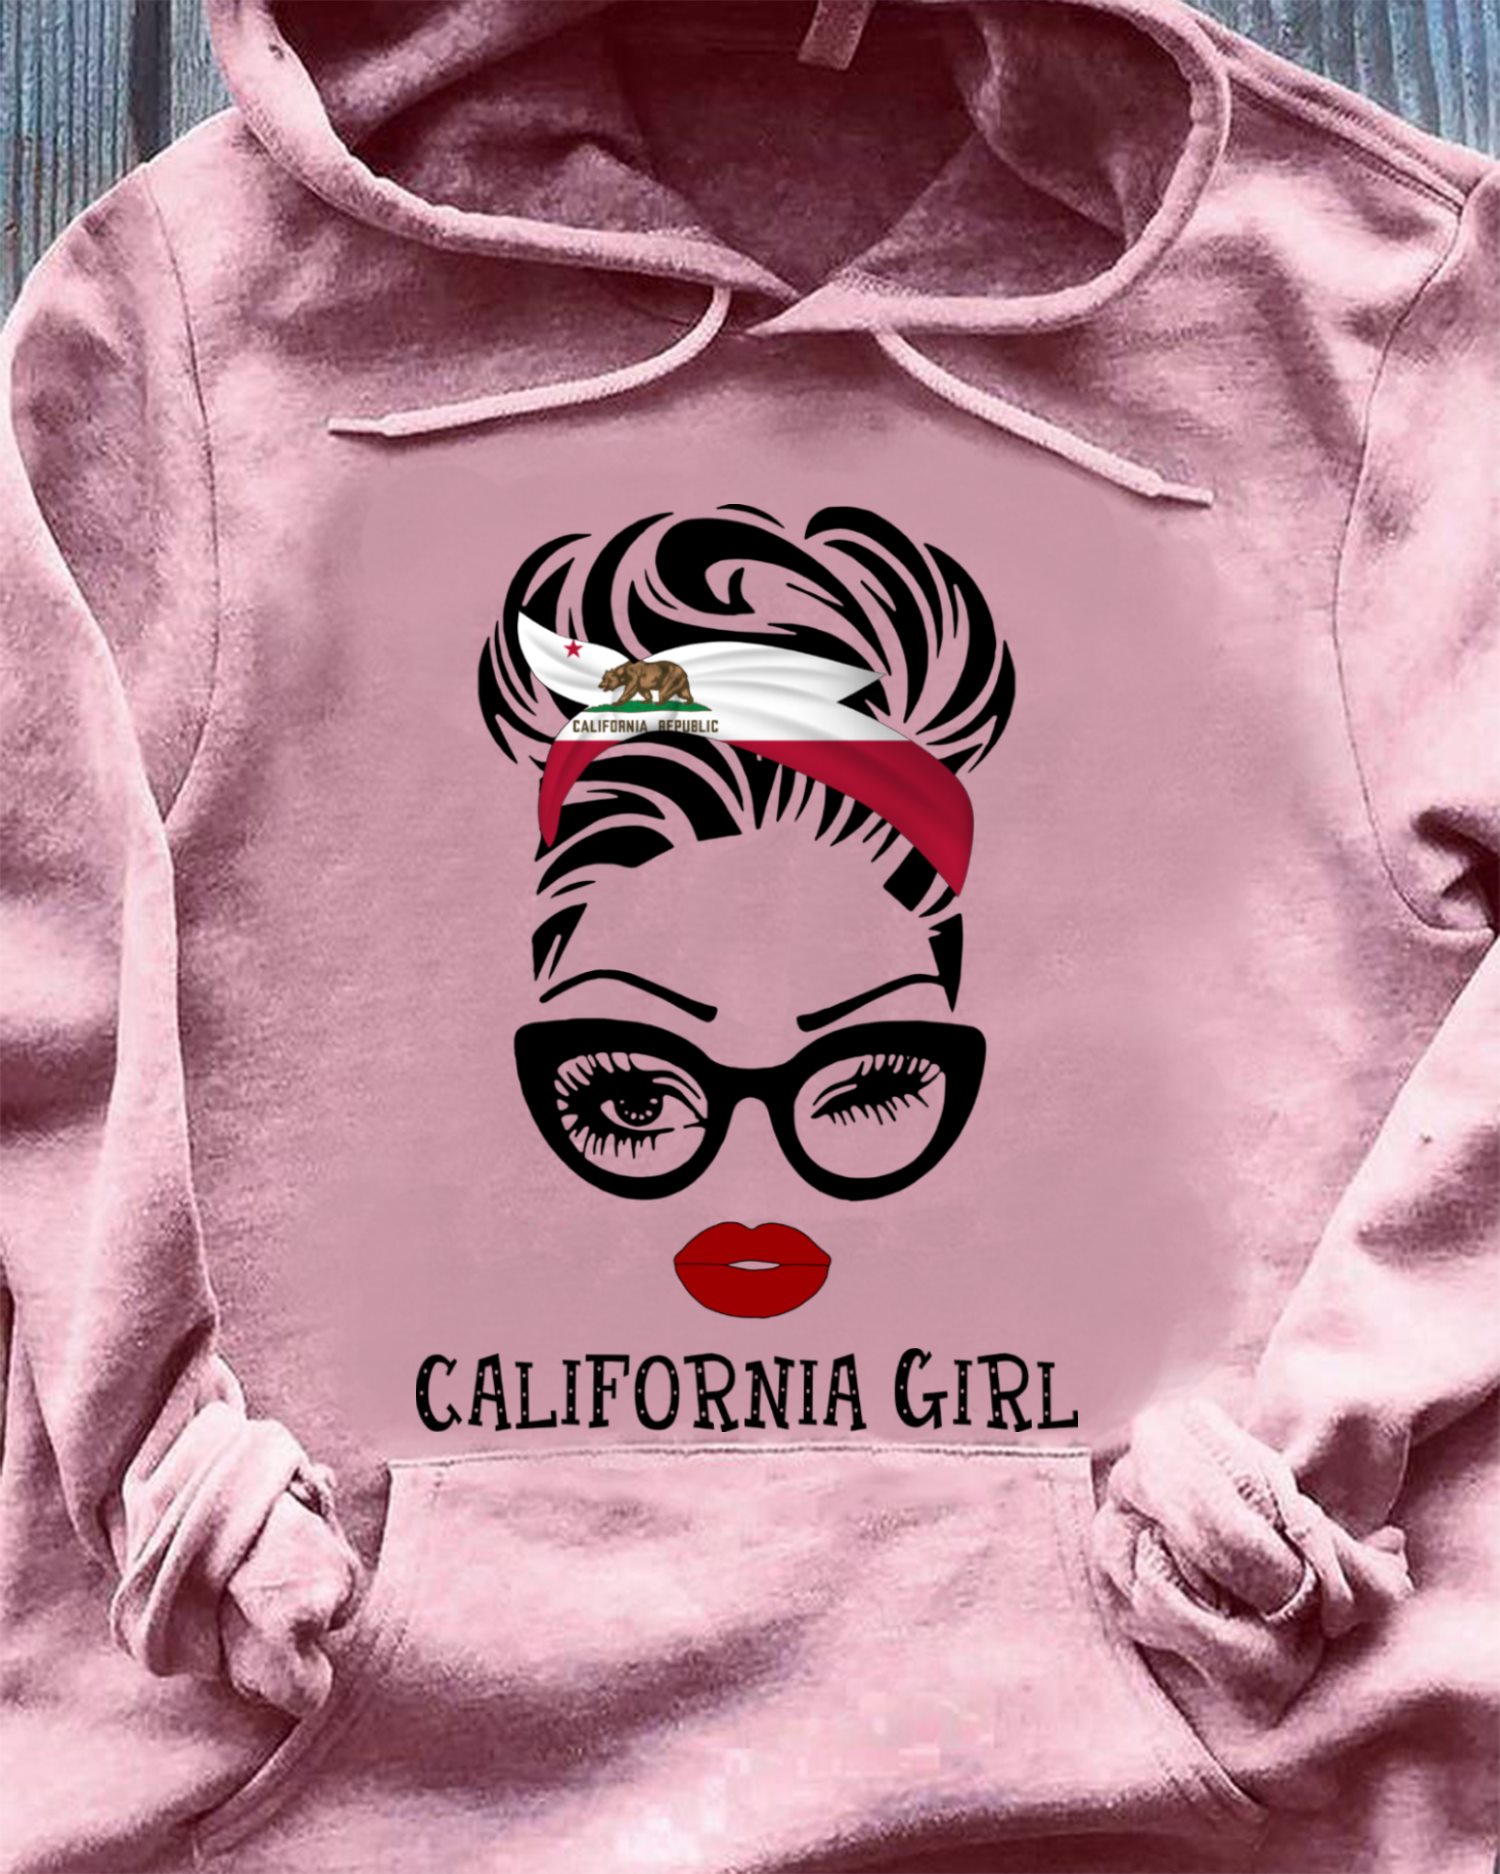 California girl, California republic - Women face